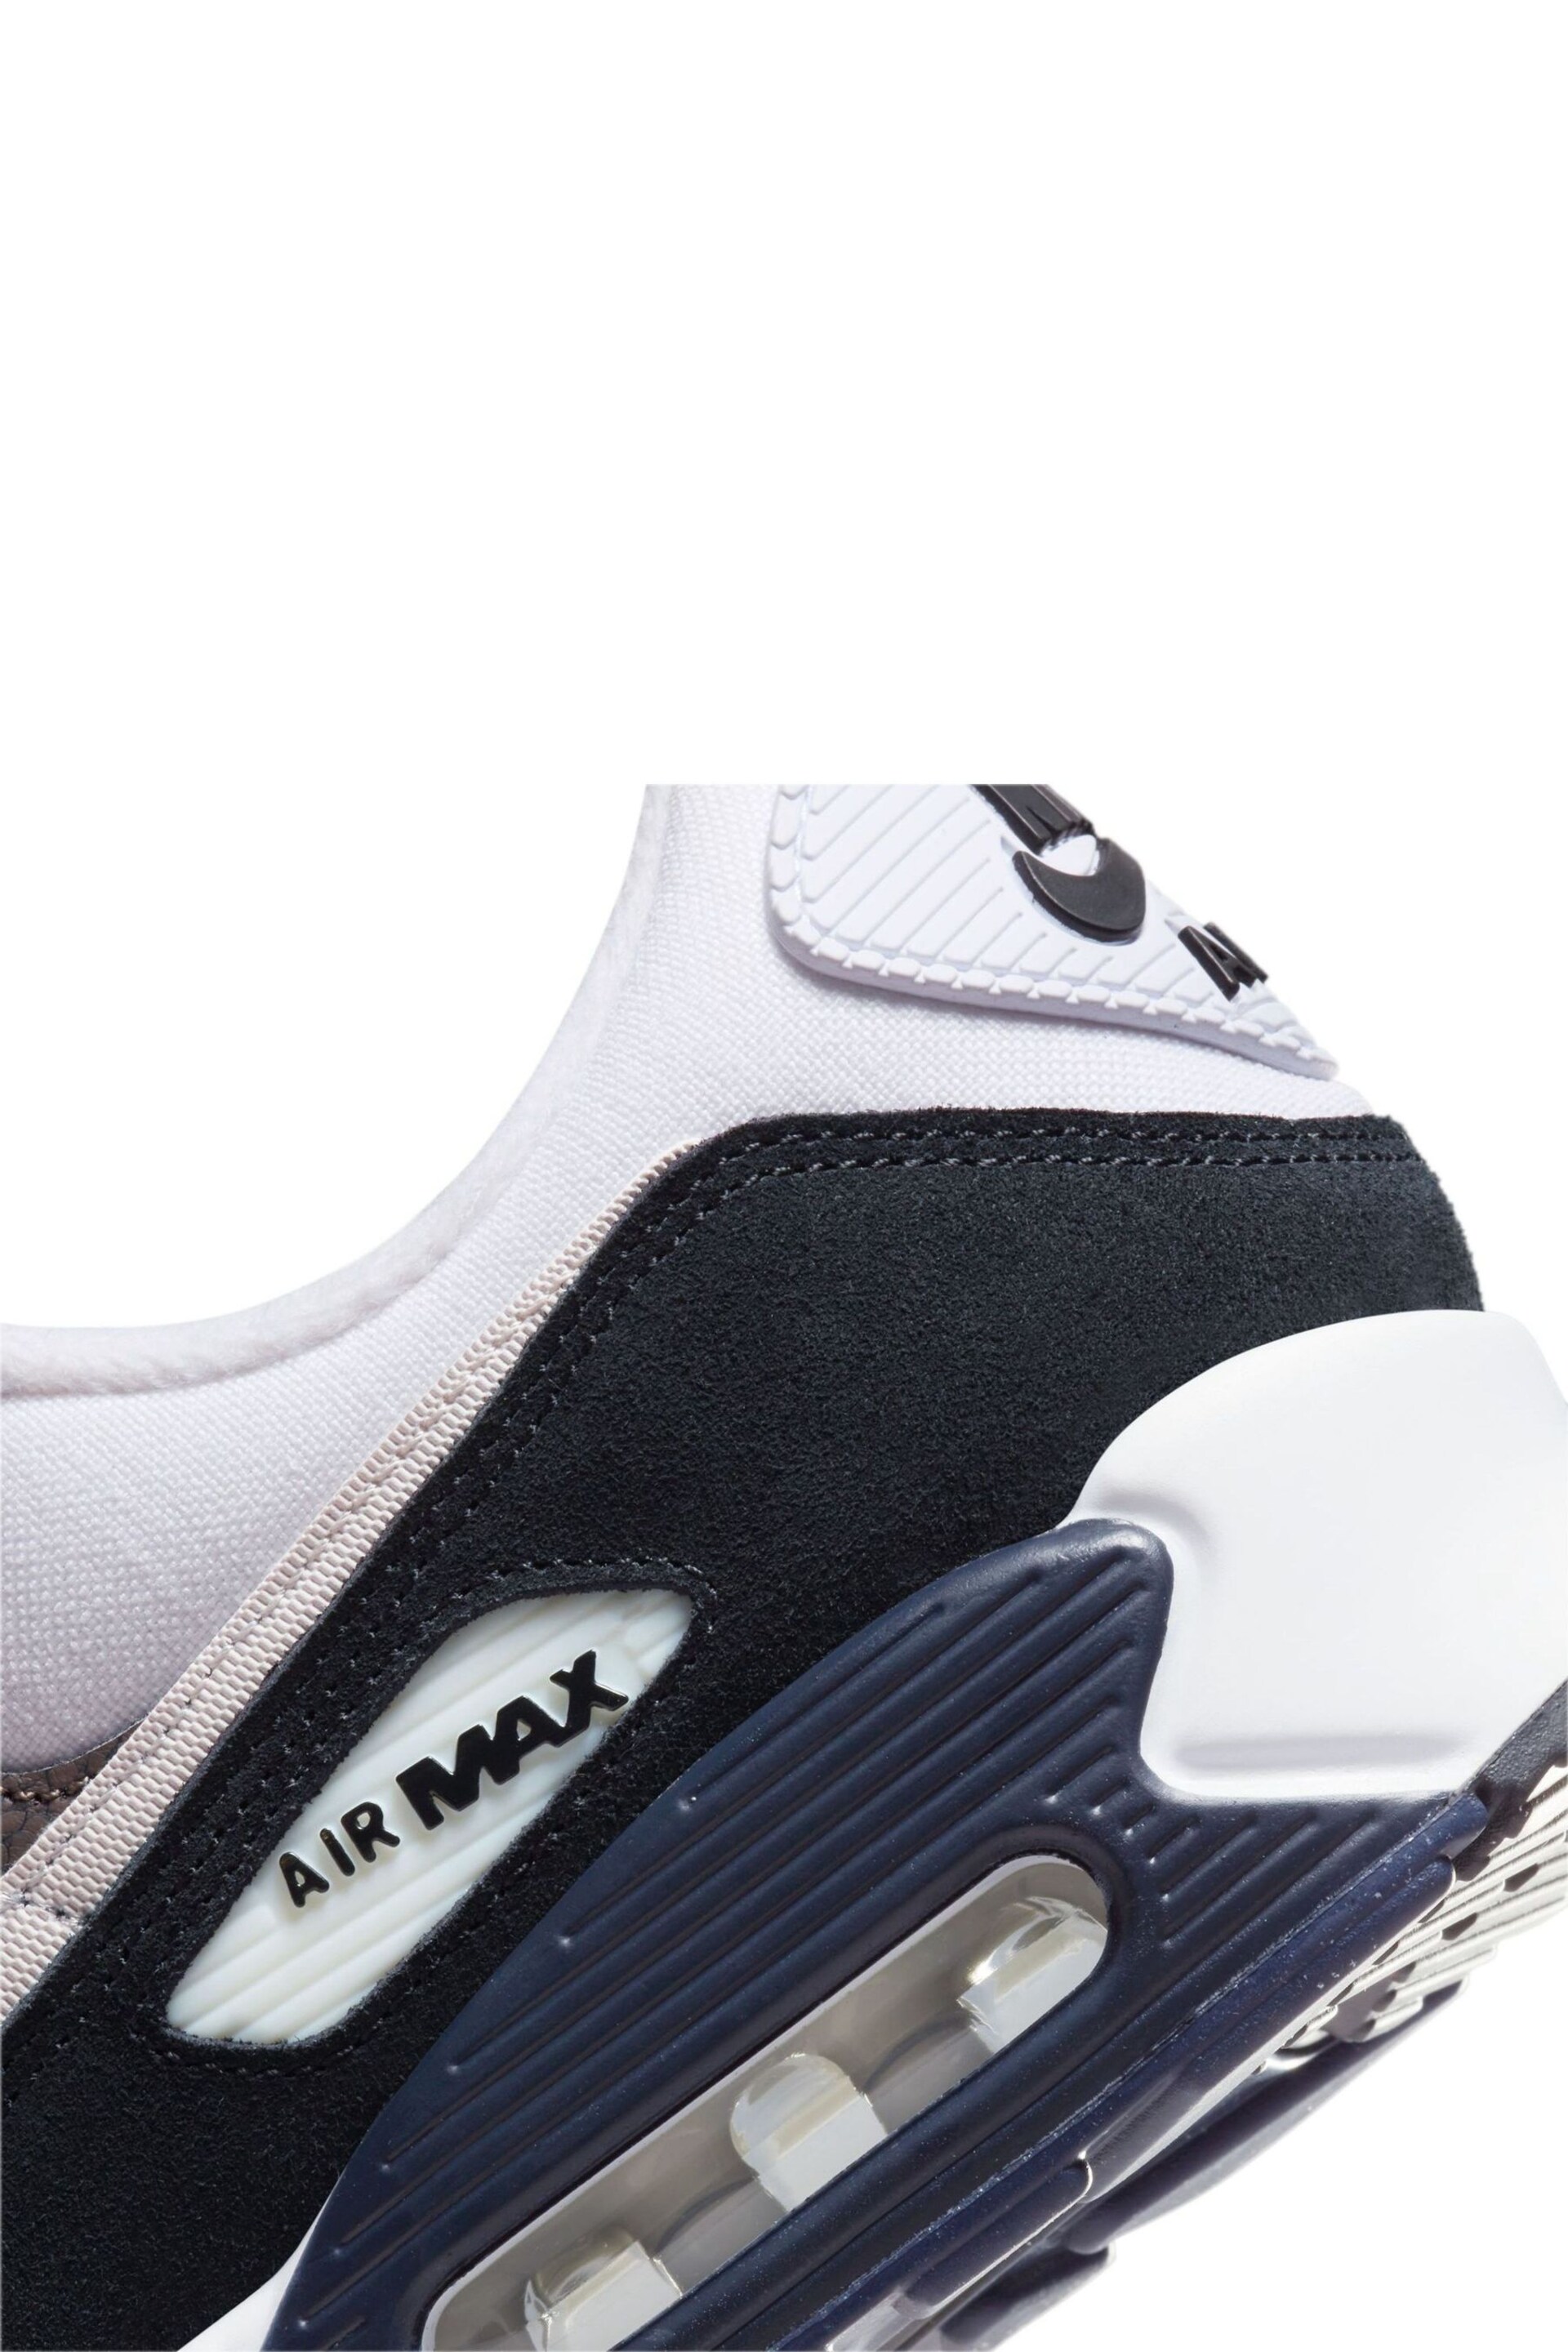 Nike Grey/Black Air Max 90 Trainers - Image 9 of 10